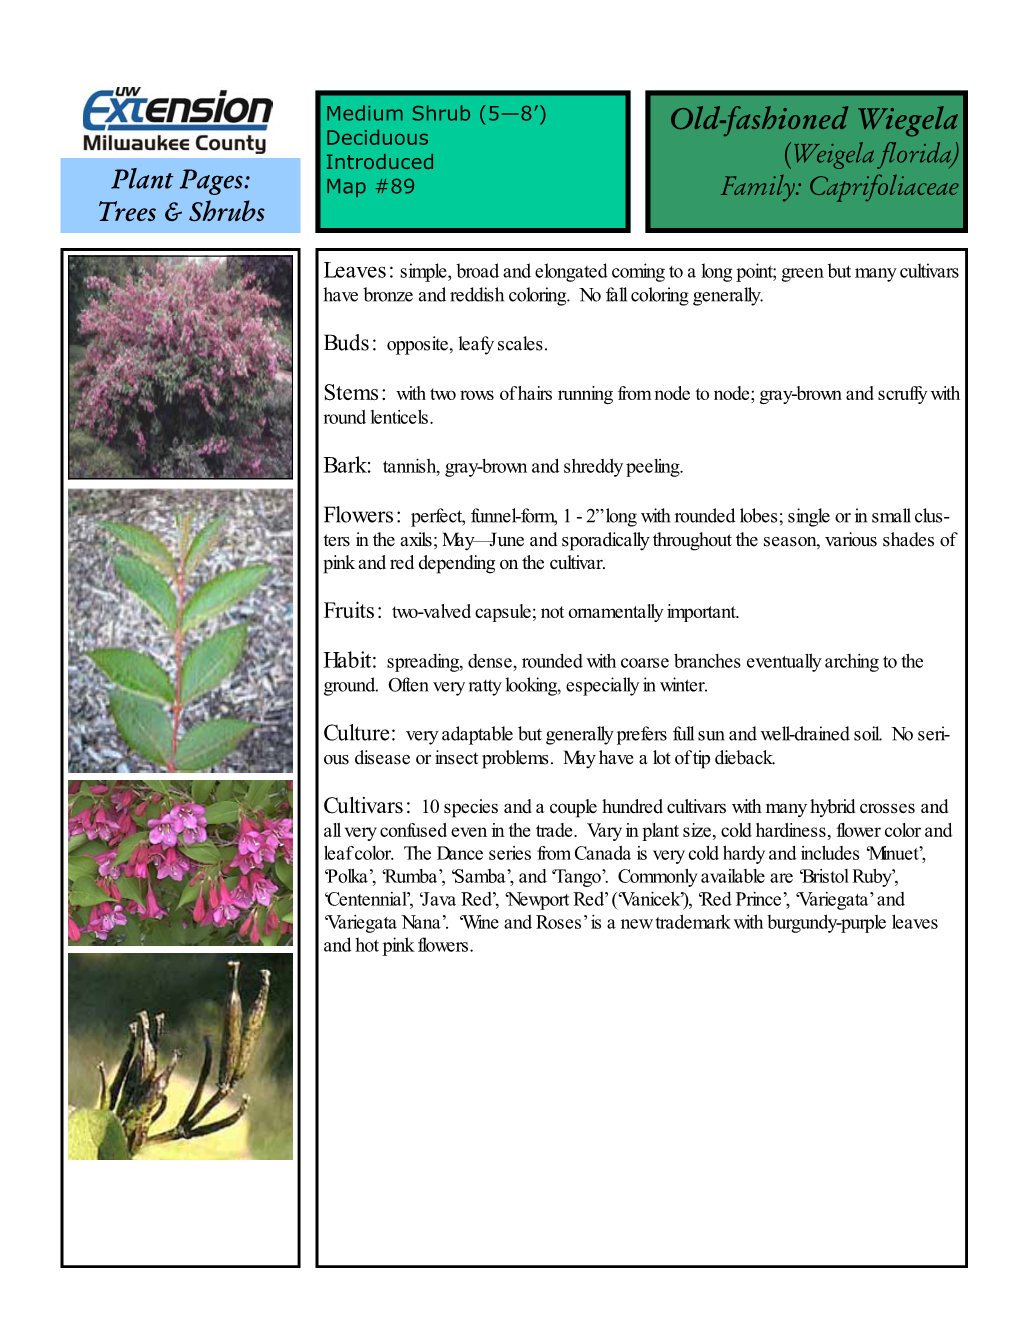 Weigela Florida) Plant Pages: Map #89 Family: Caprifoliaceae Trees & Shrubs